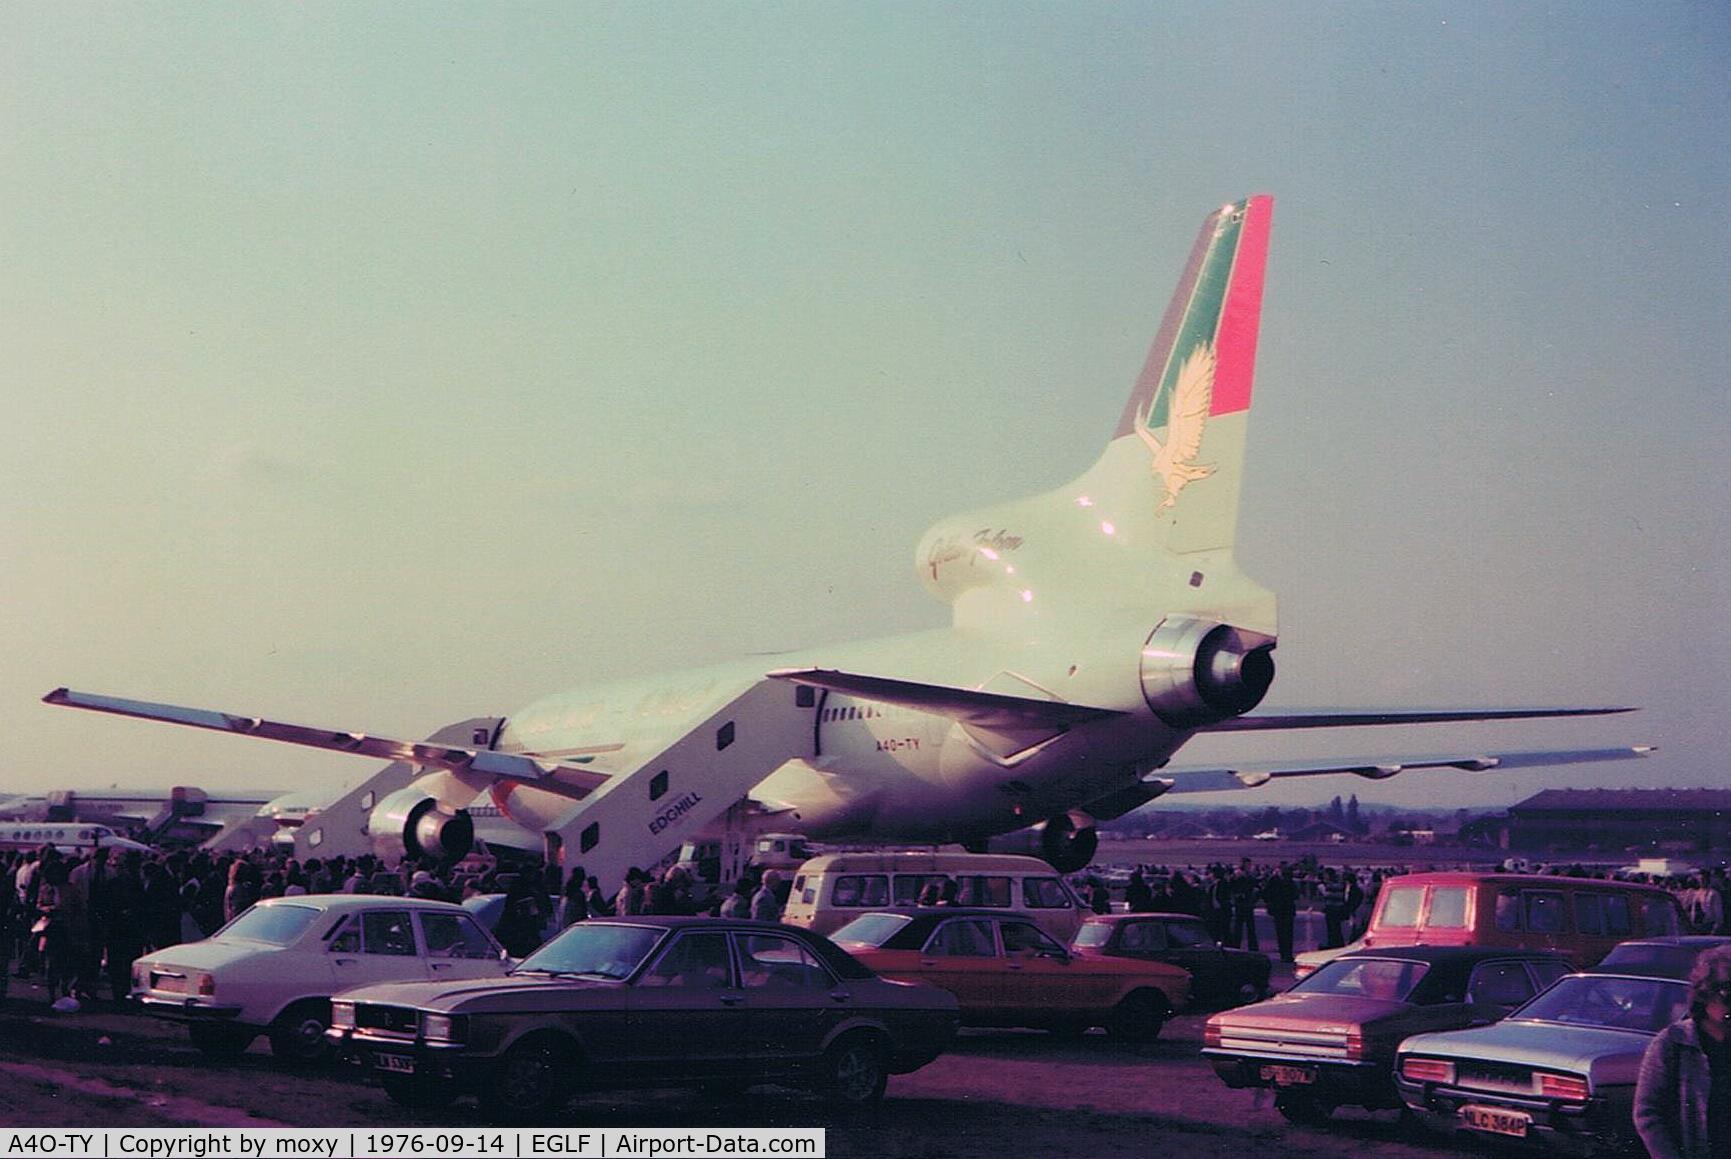 A4O-TY, 1976 Lockheed L-1011-385-1-15 TriStar 200 C/N 193U-1138, LOCKHEED L1011 GULFAIR (Looks like the Sweeney parked up behind it)